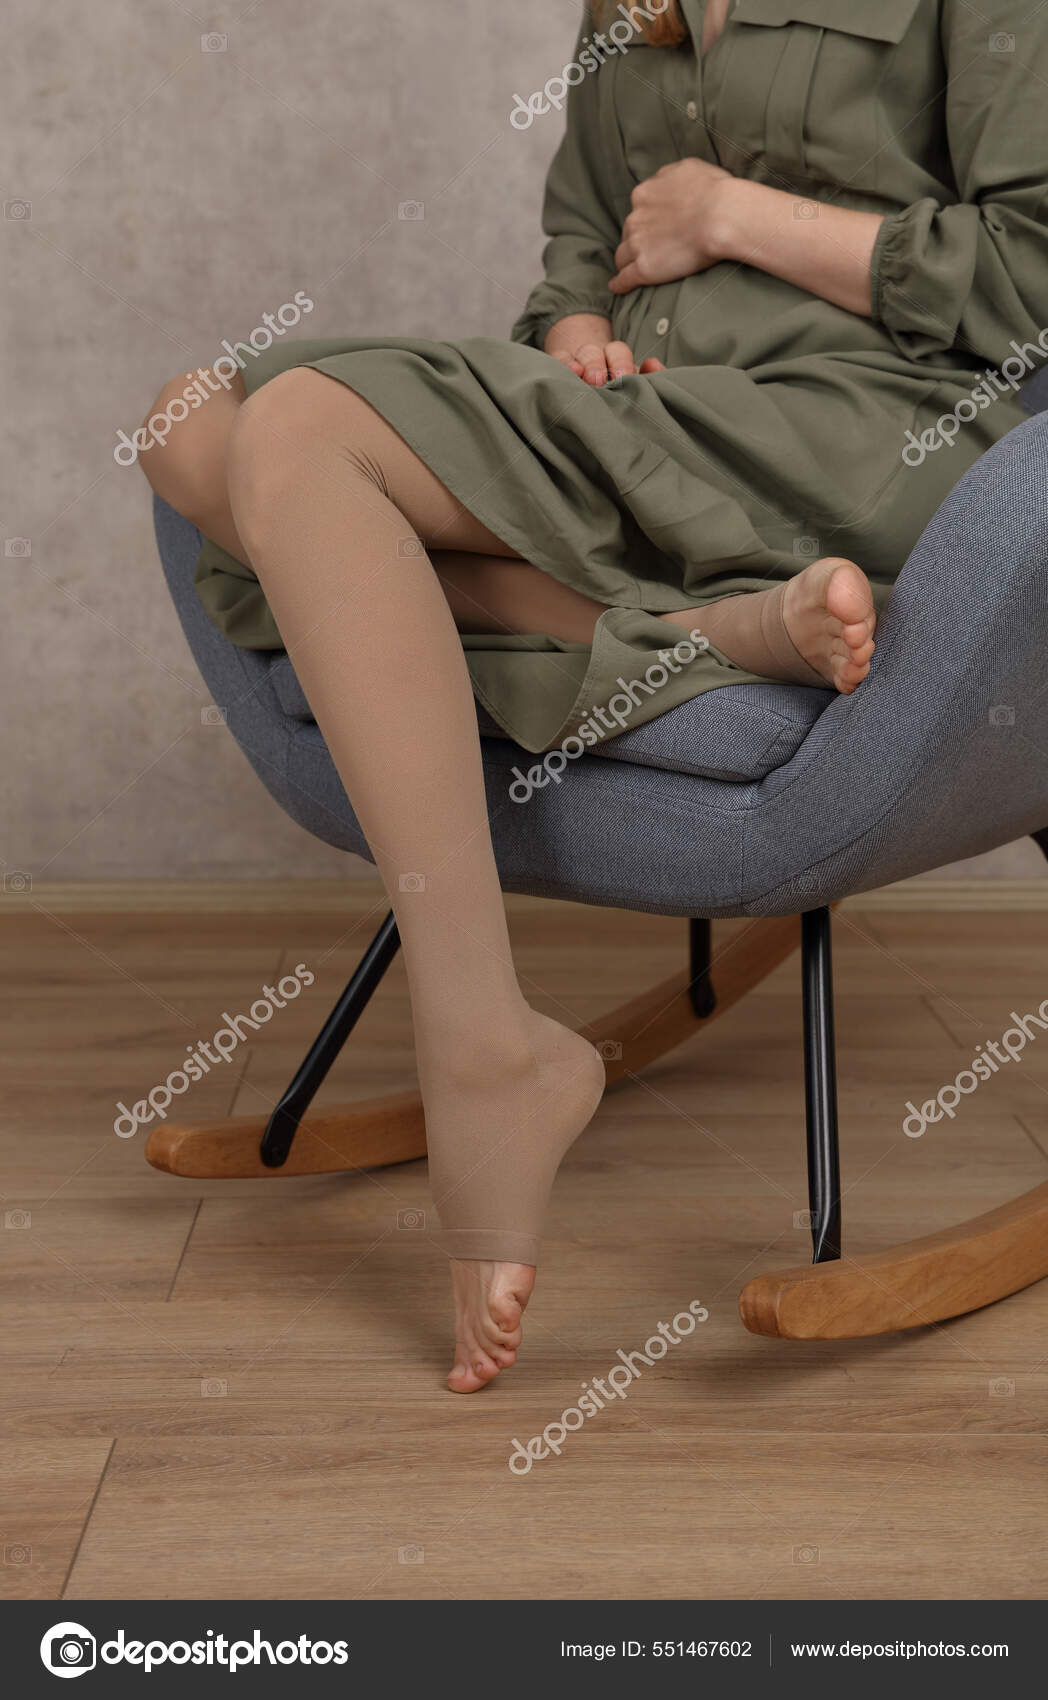 https://st.depositphotos.com/4226049/55146/i/1600/depositphotos_551467602-stock-photo-pregnant-woman-wearing-compression-stockings.jpg